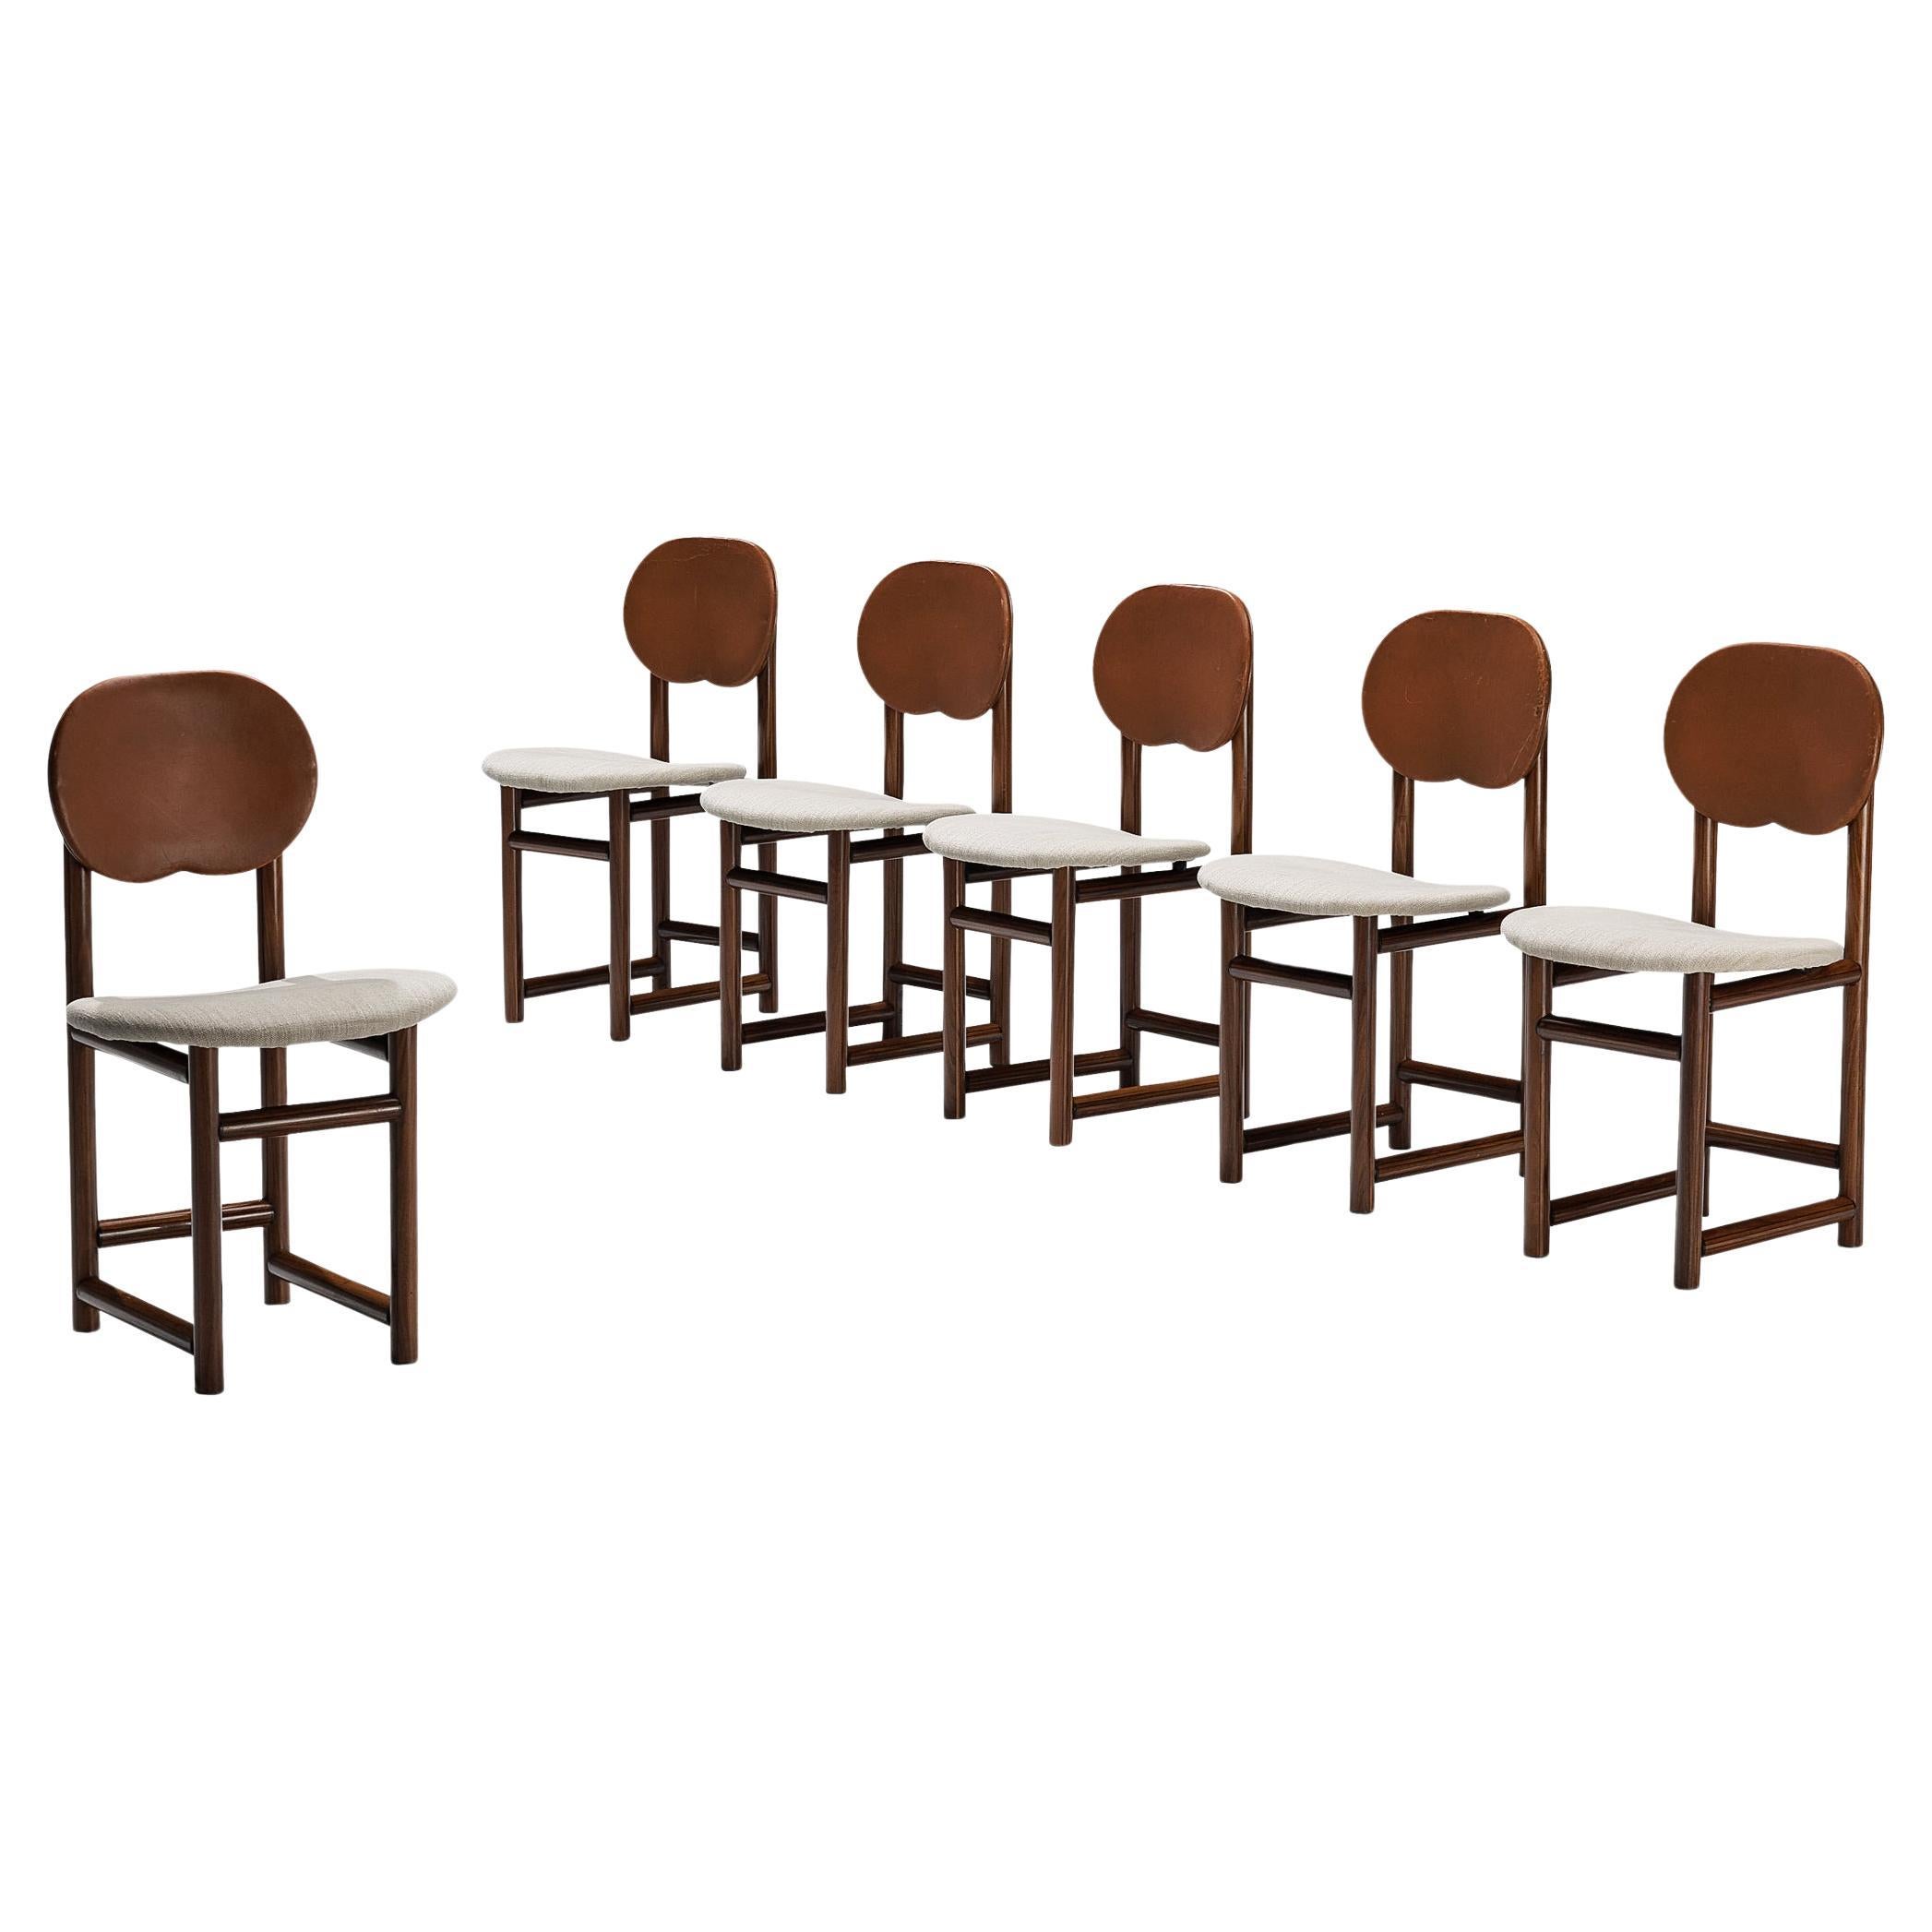 Afra & Tobia Scarpa for Maxalto 'New Harmony' Set of Six Dining Chairs 